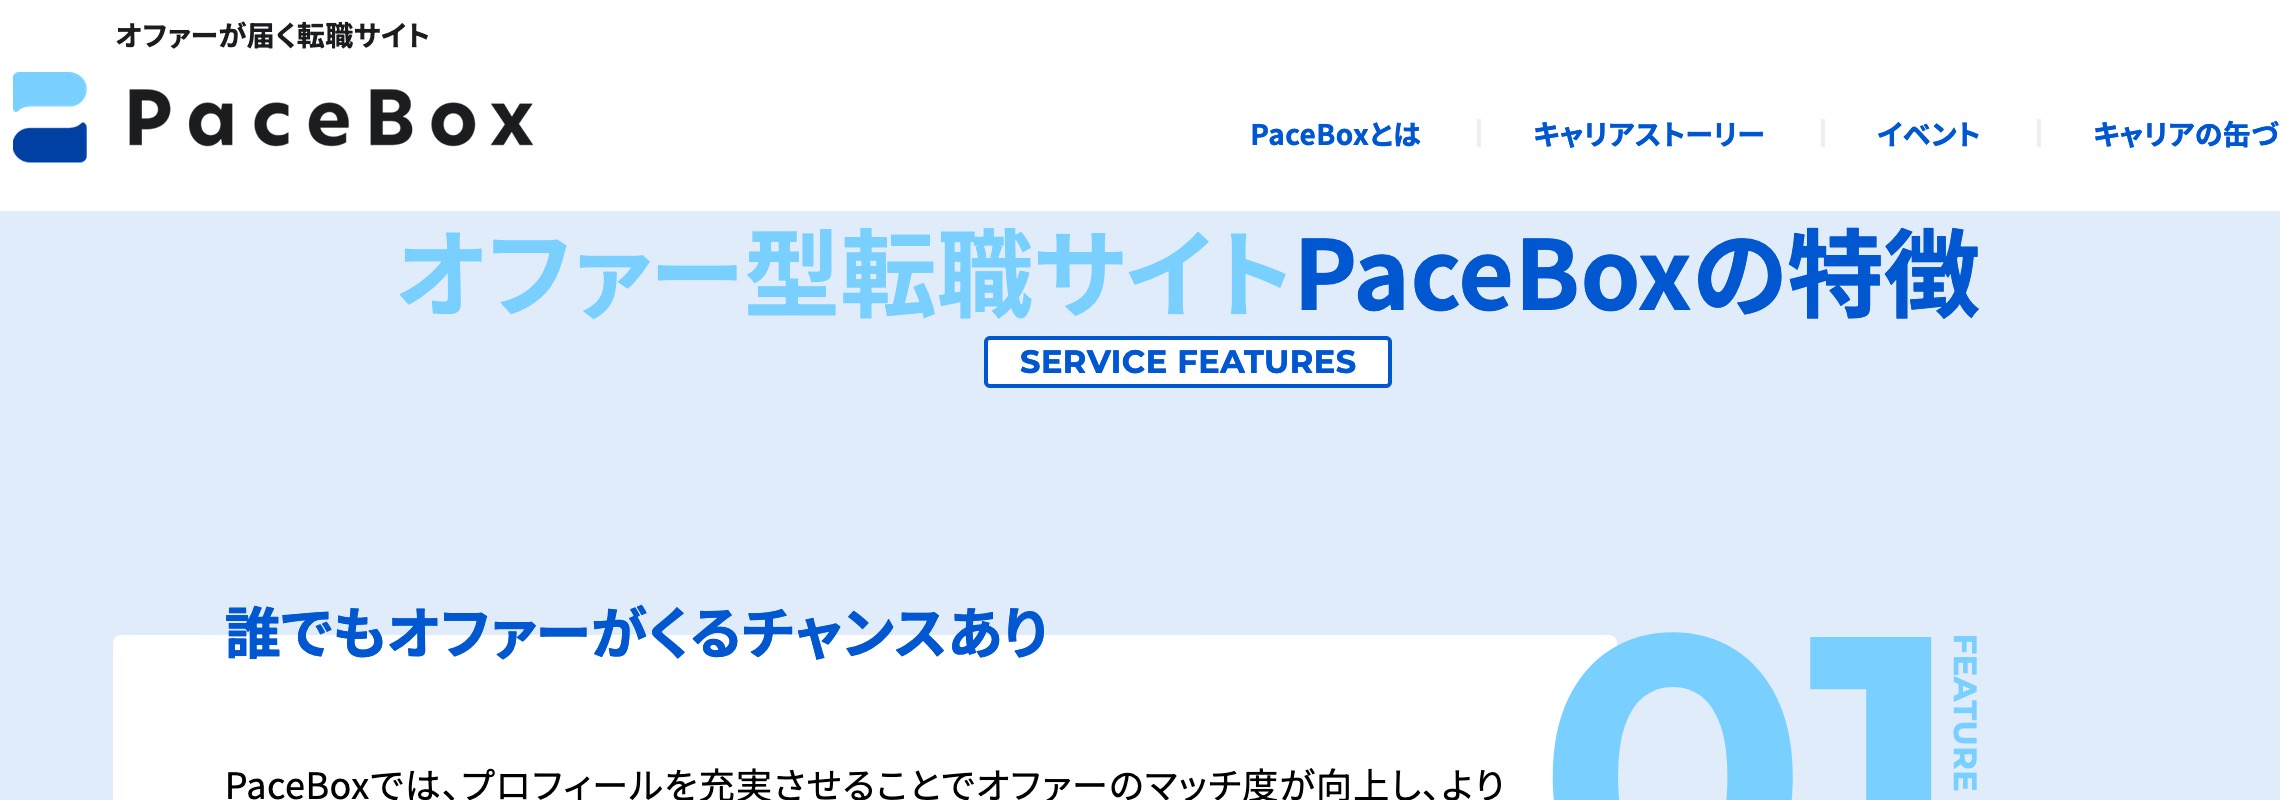 PaceBox(ペースボックス)の公式HP画像